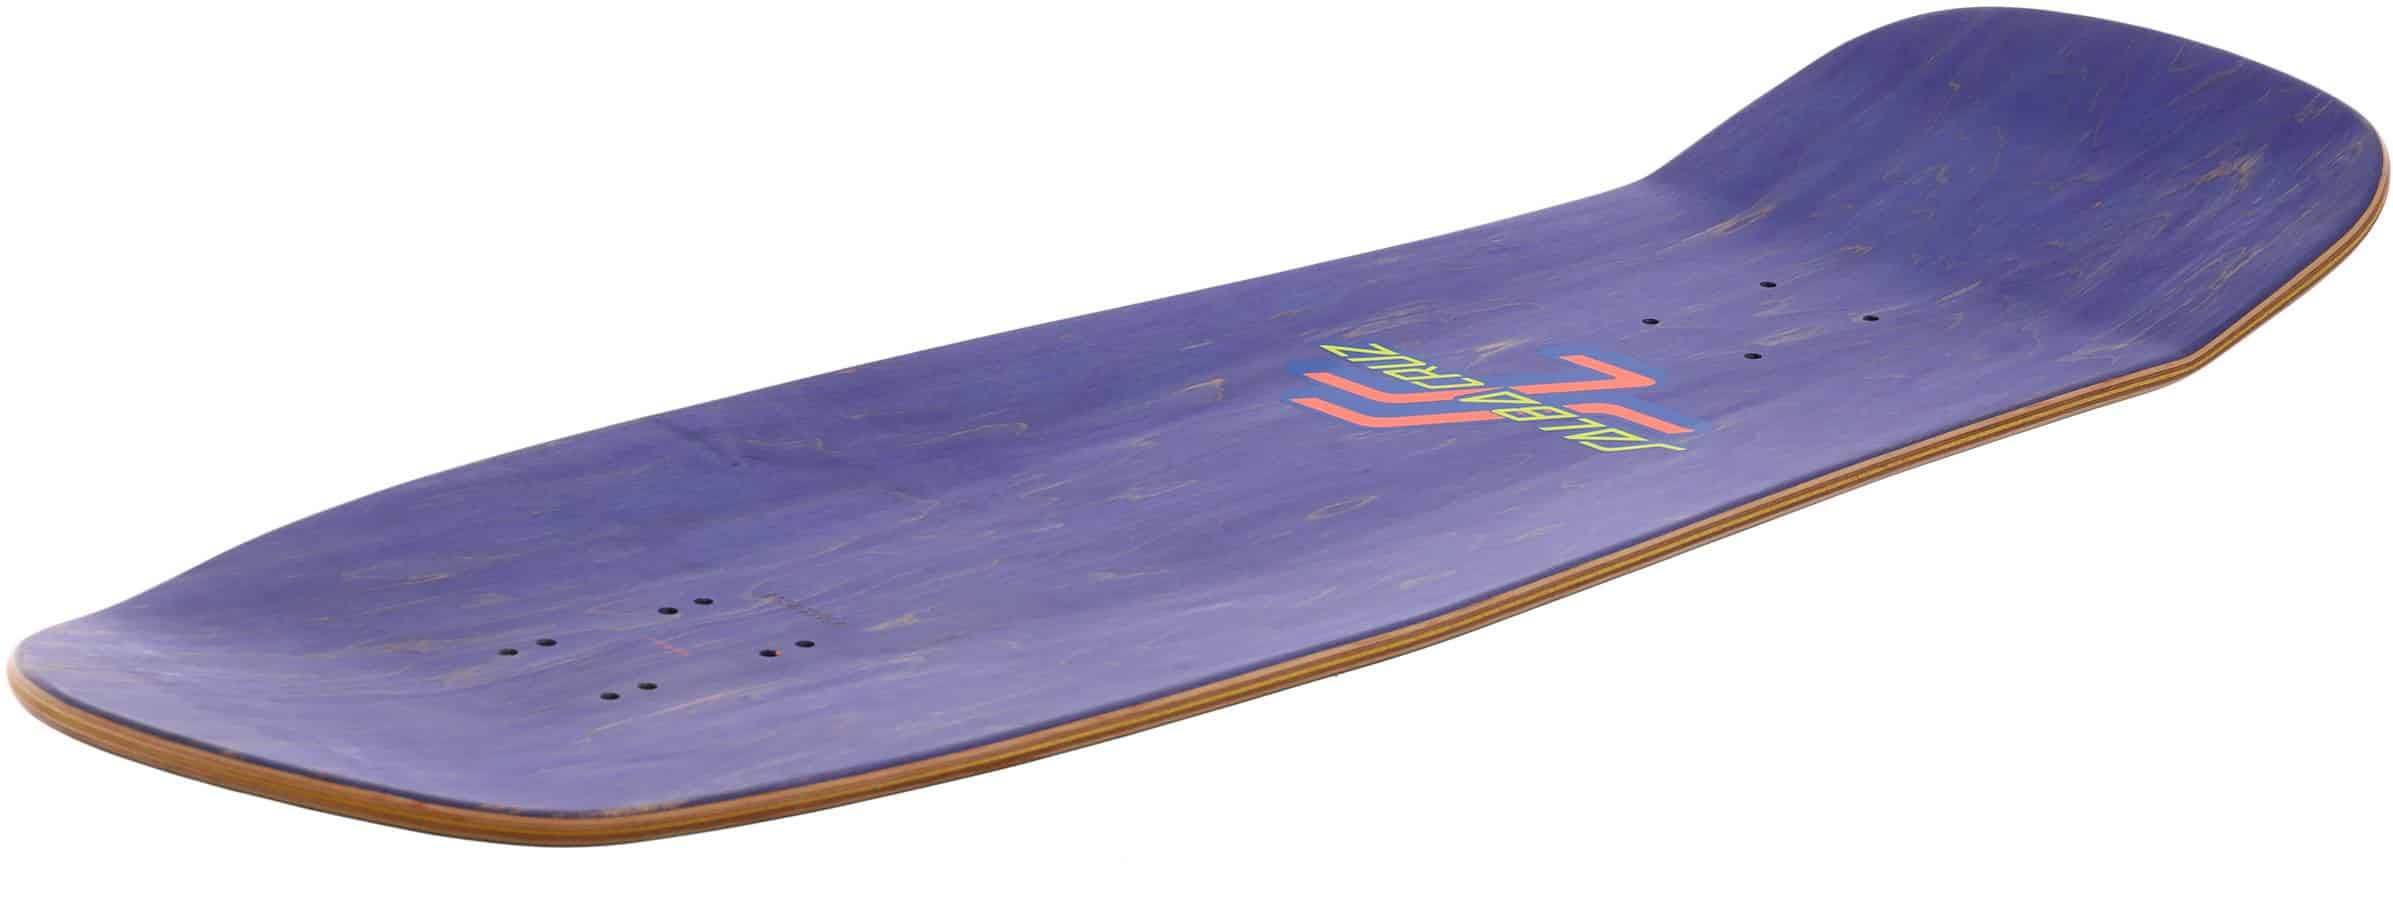 Geometrie spade Negen Santa Cruz Salba Baby Stomper 10.09 LTD Reissue Skateboard Deck - Free  Shipping | Tactics